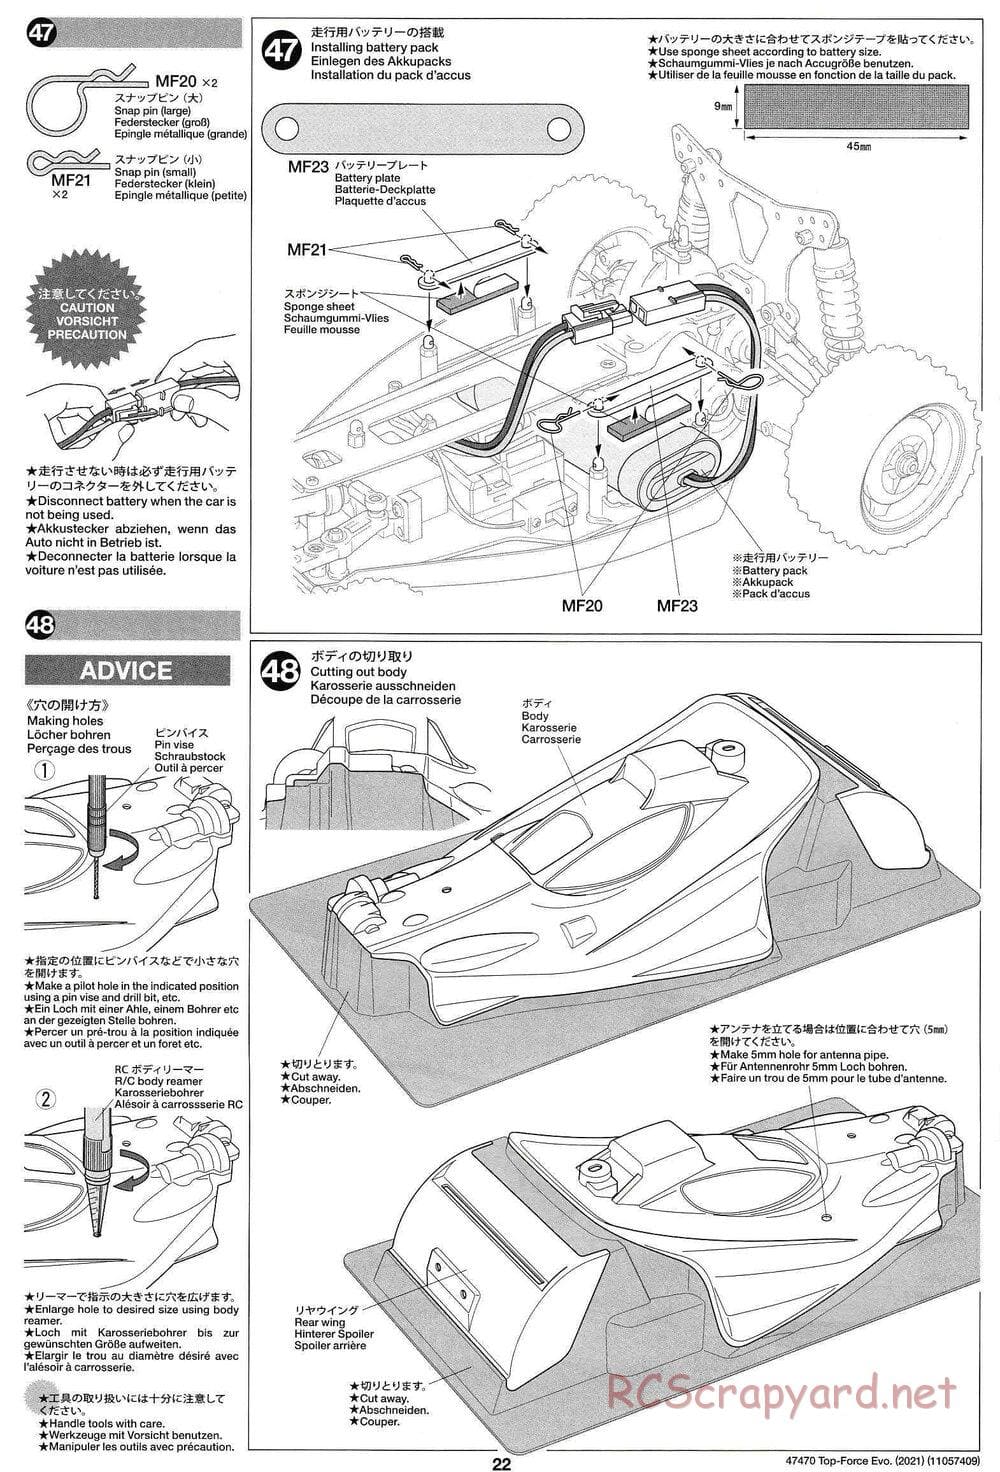 Tamiya - Top Force Evo 2021 - DF-01 Chassis - Manual - Page 22